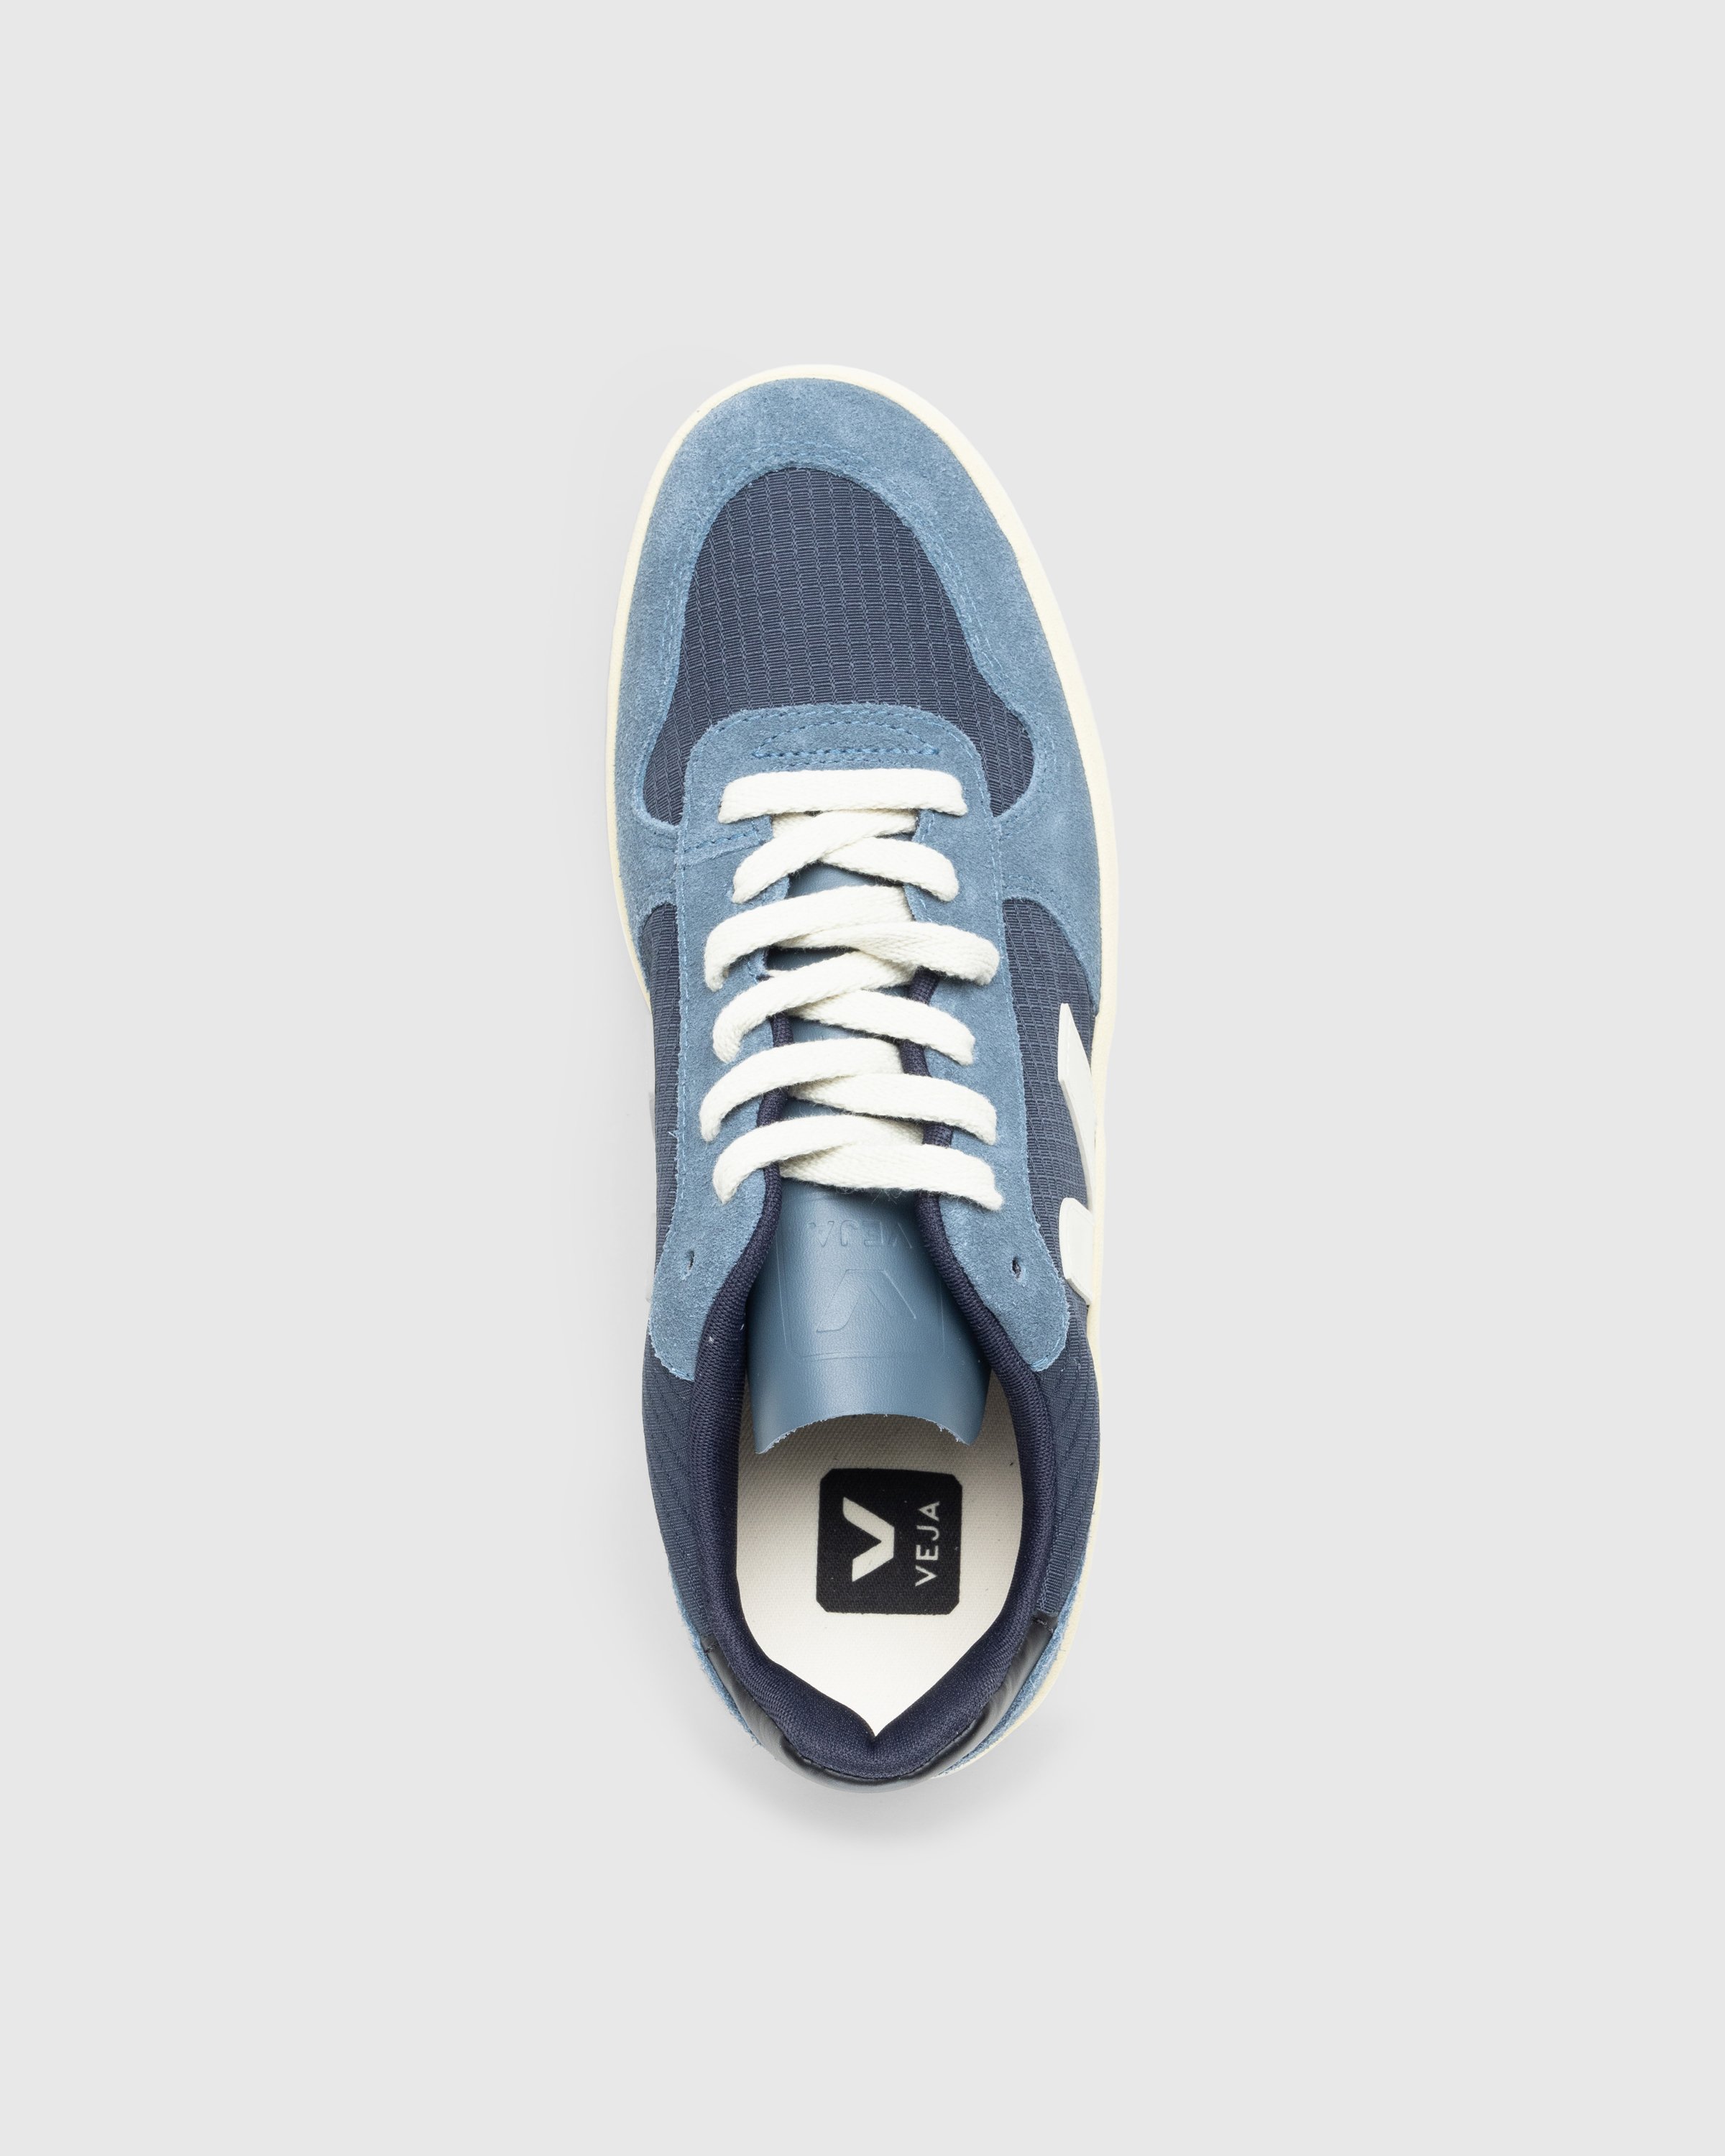 VEJA - V-10 Ripstop Nautico/Pierre - Footwear - Blue - Image 5